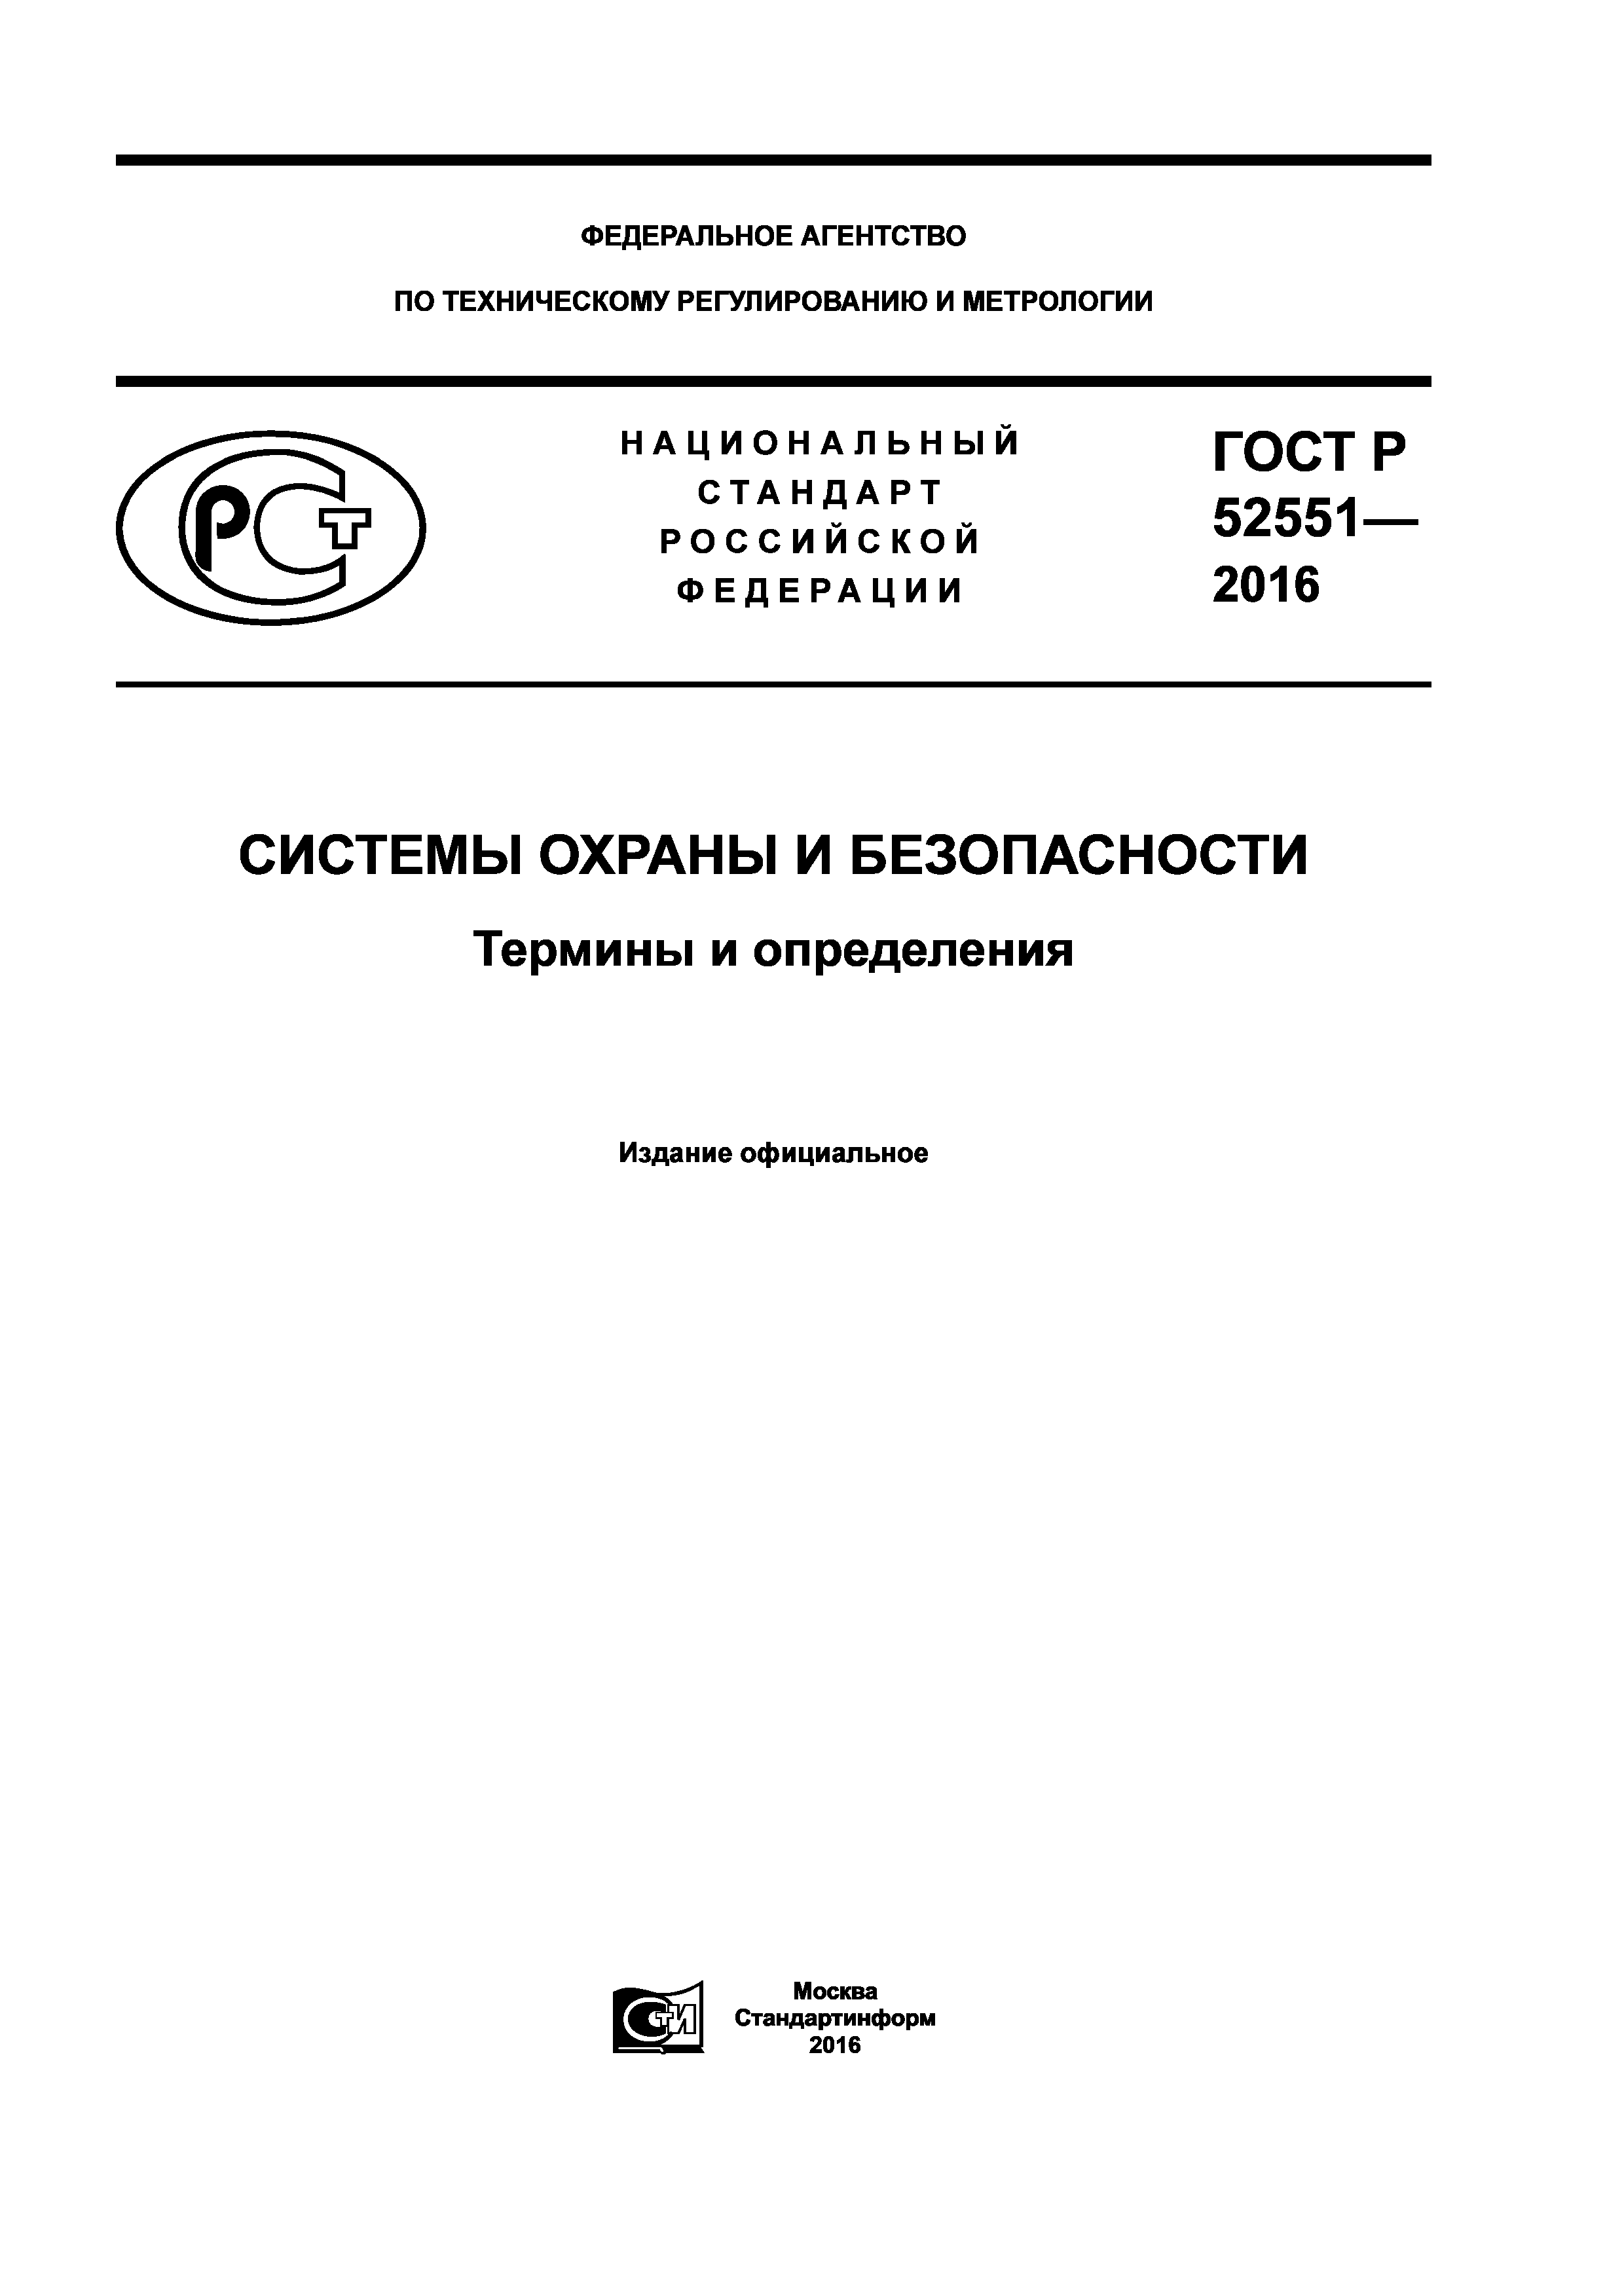 ГОСТ Р 52551-2016